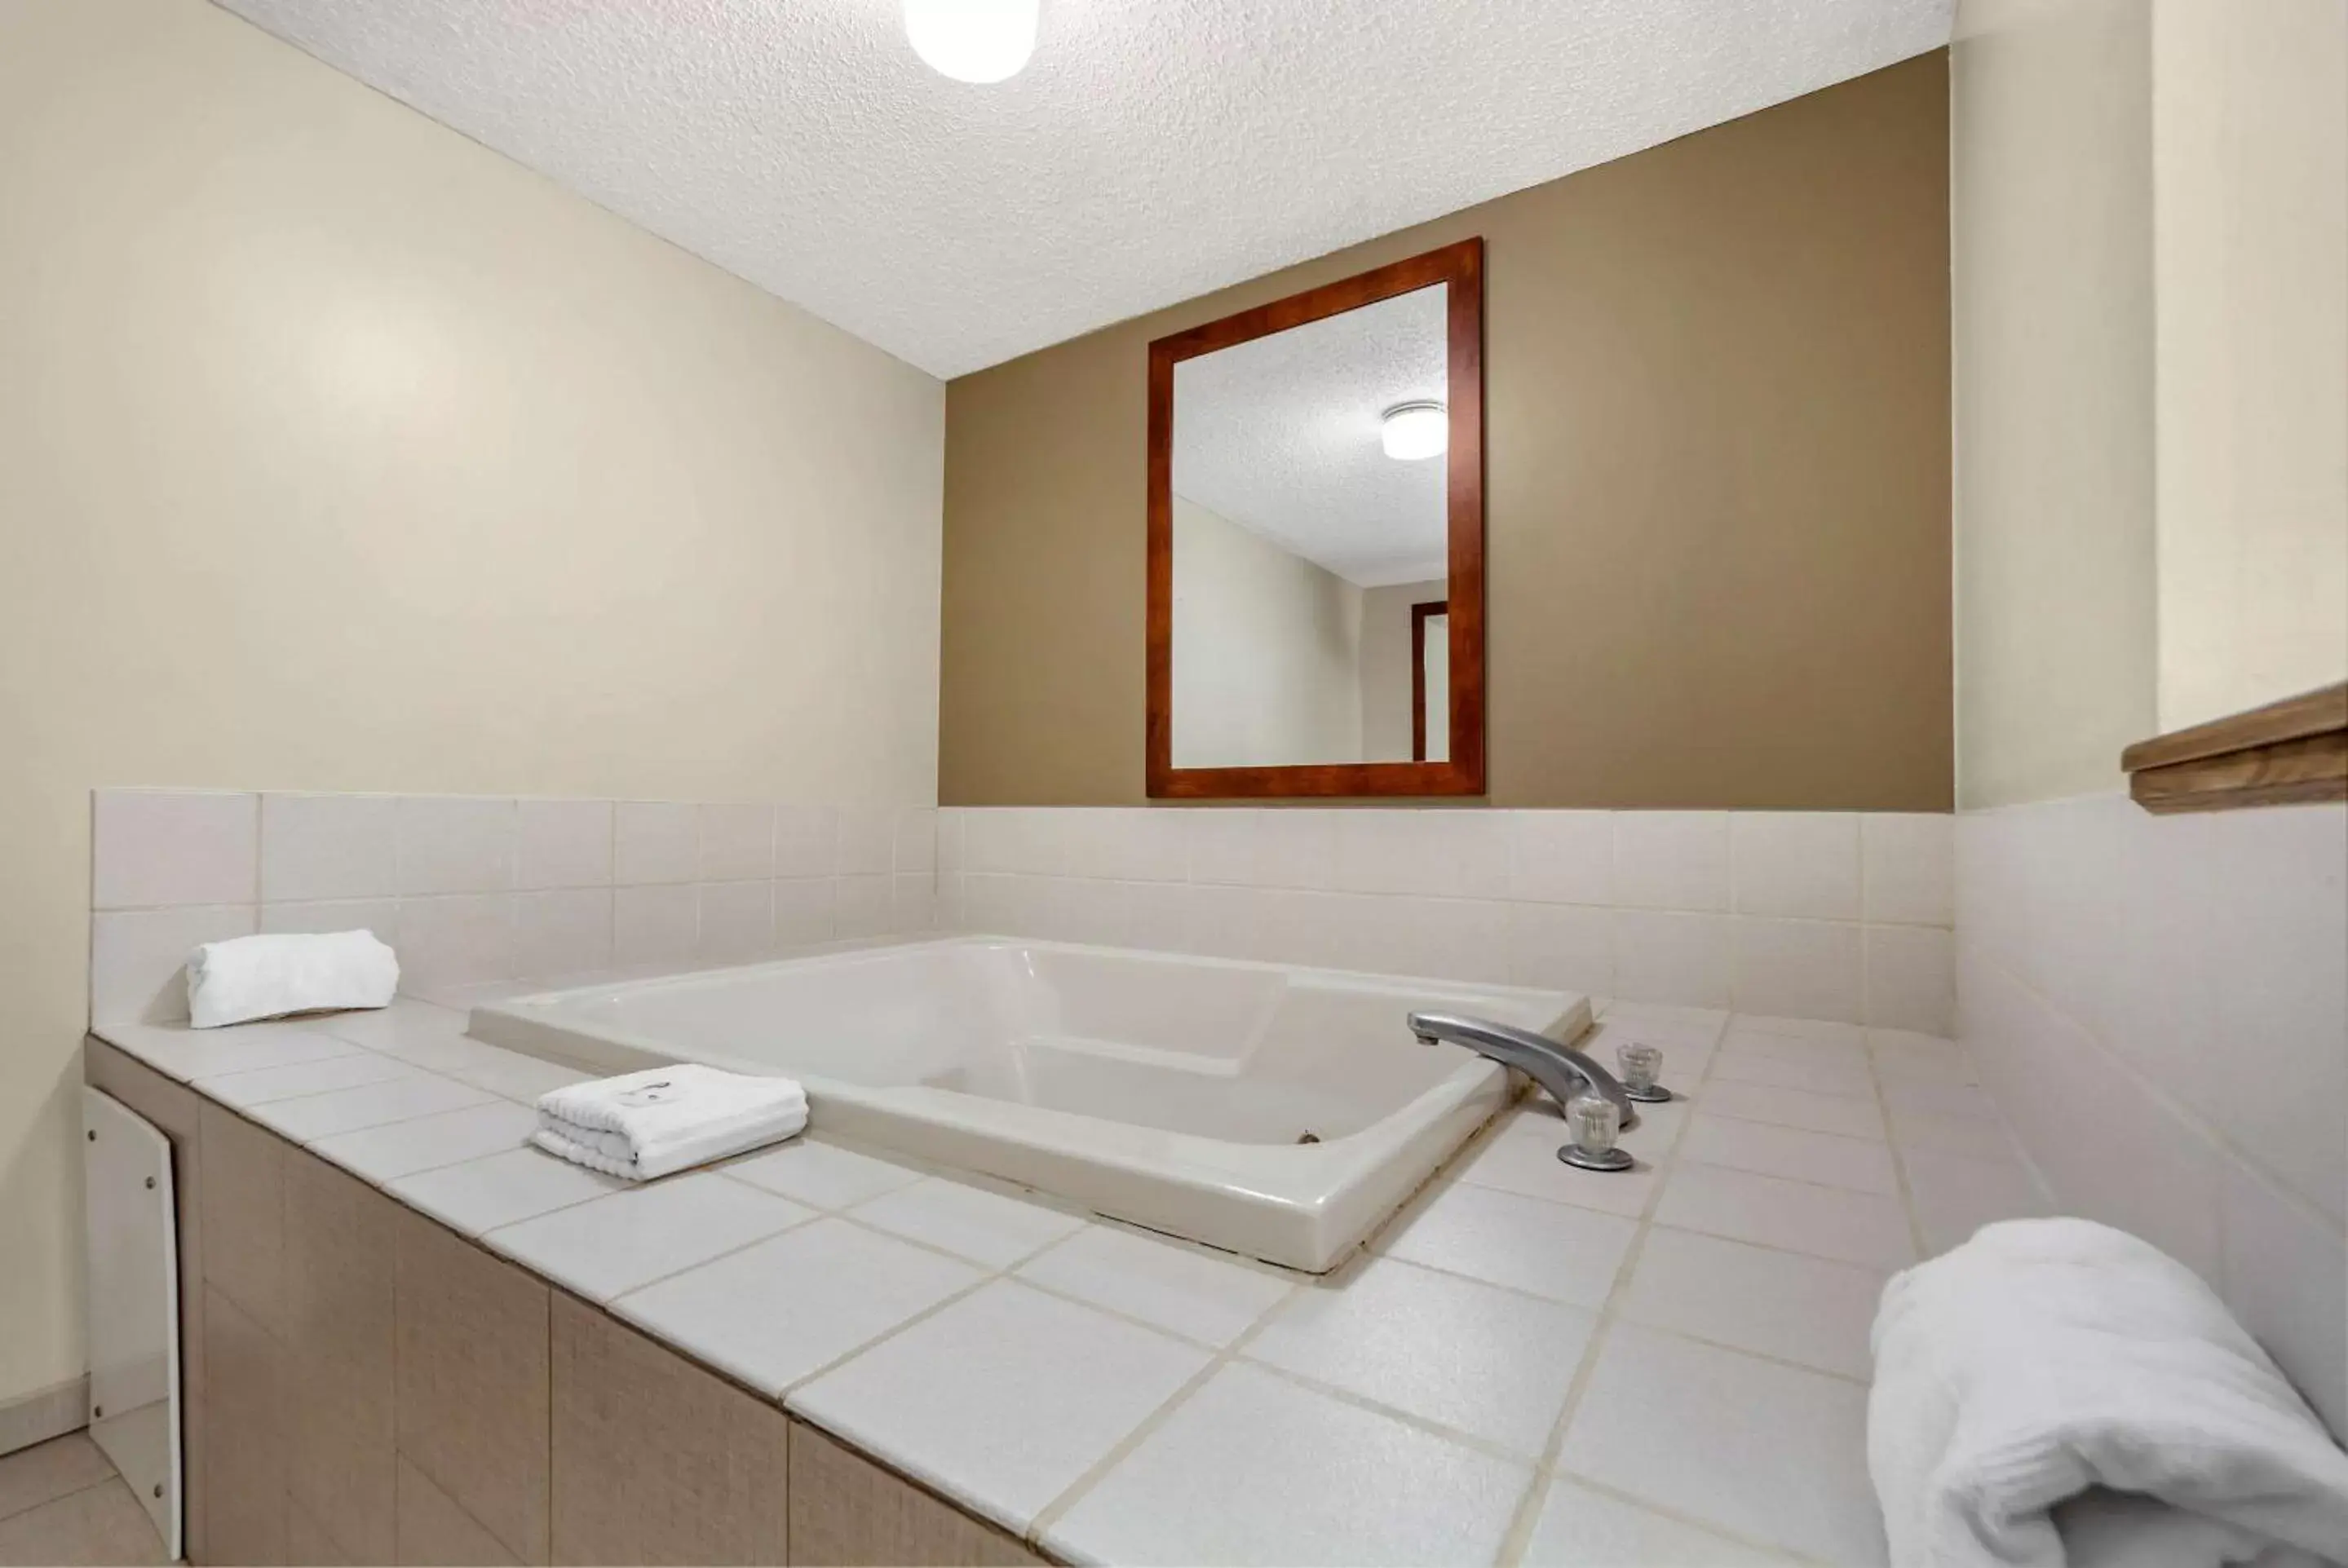 Photo of the whole room, Bathroom in Comfort Inn Valentine